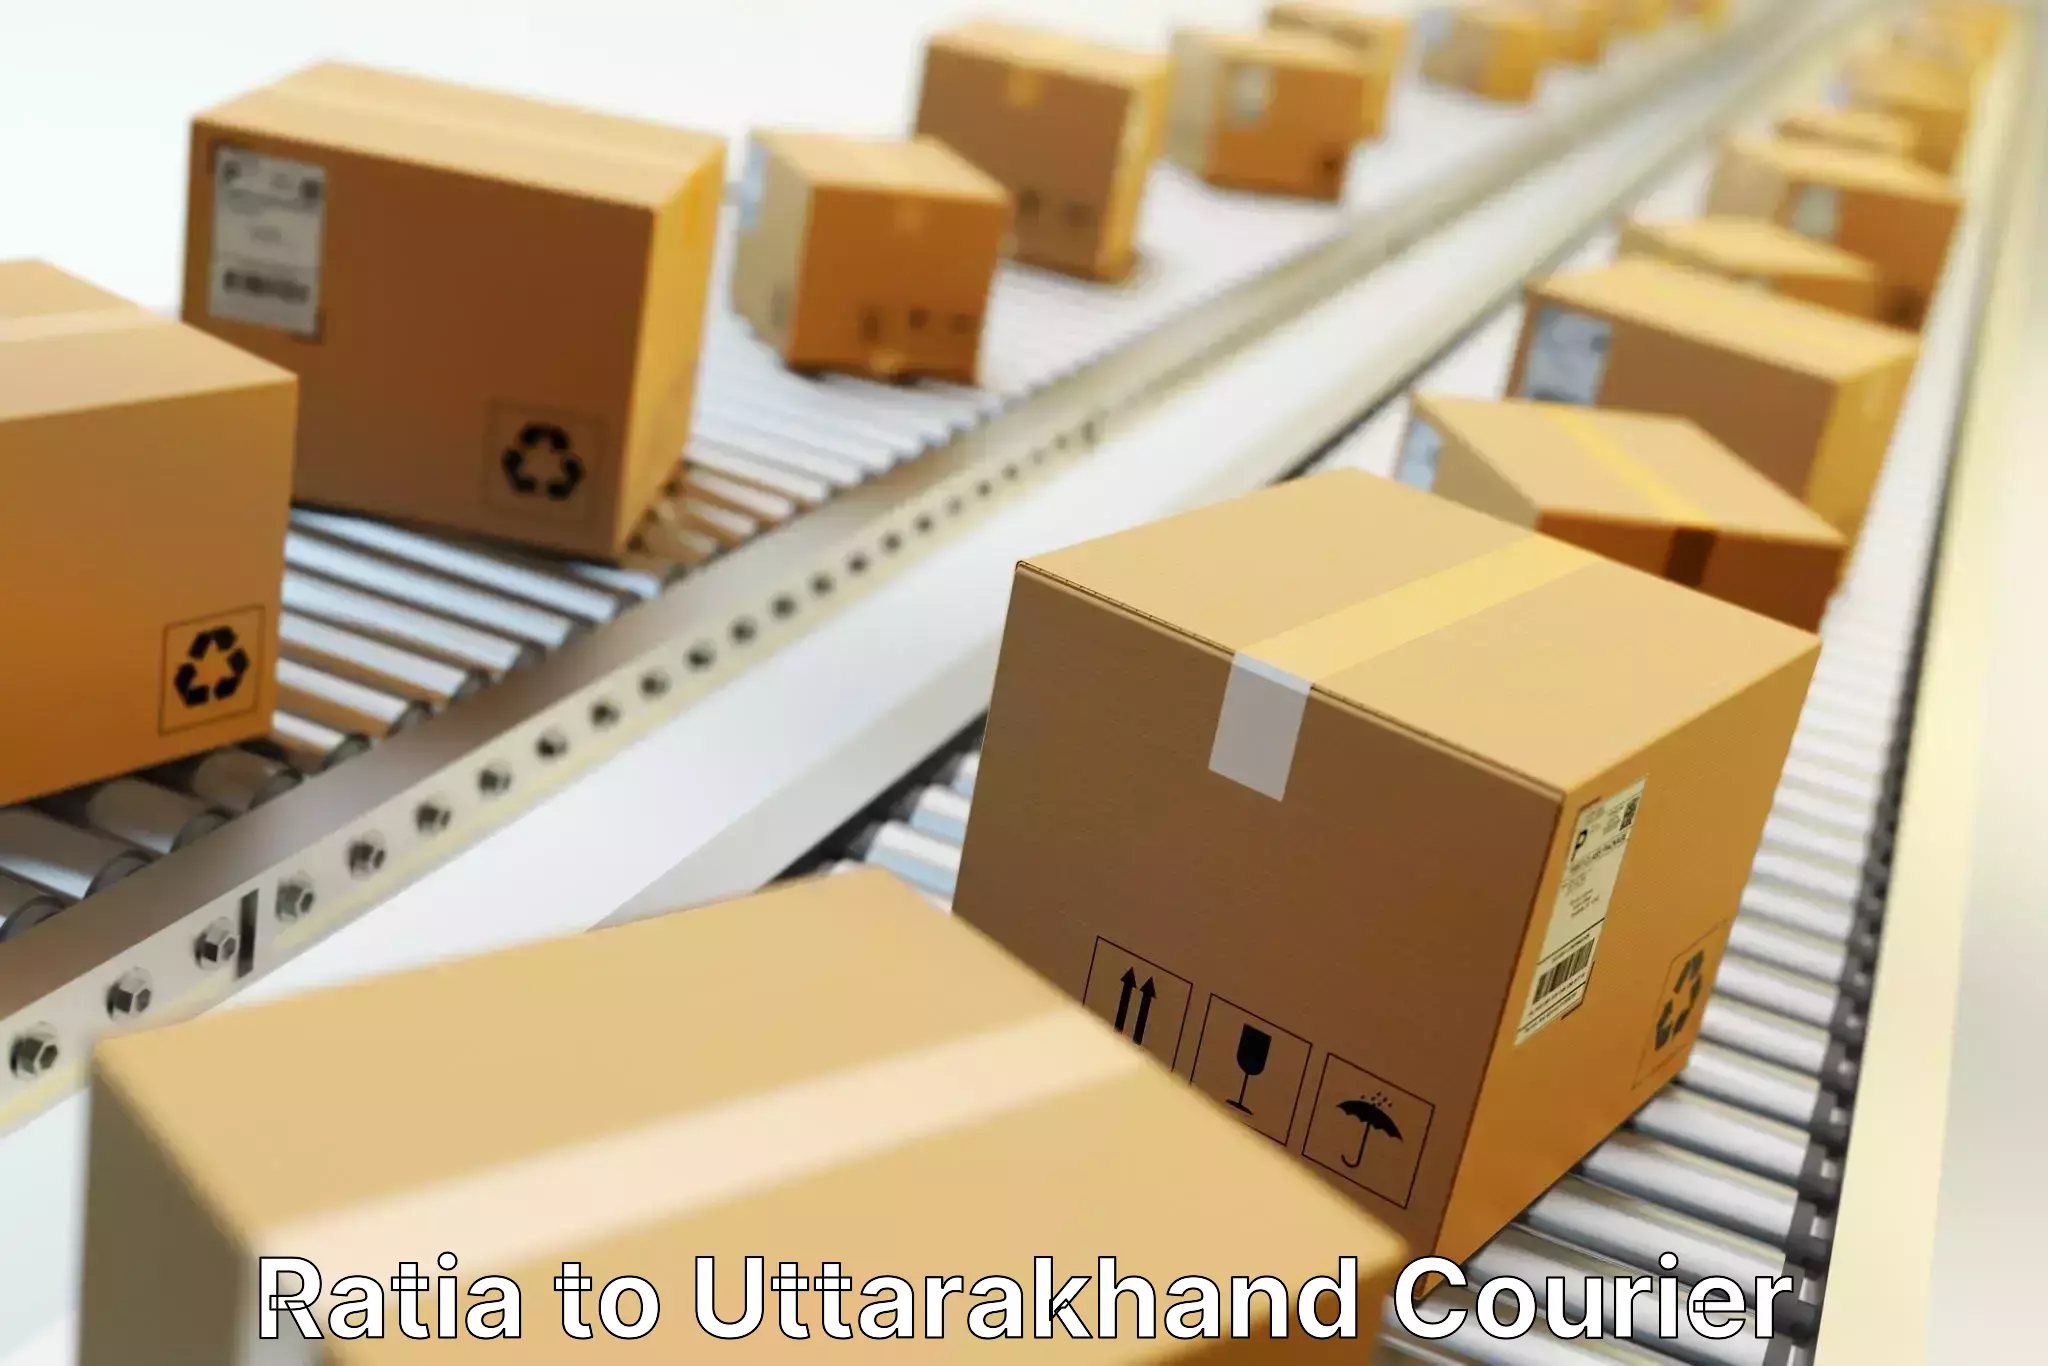 Global logistics network Ratia to Uttarakhand